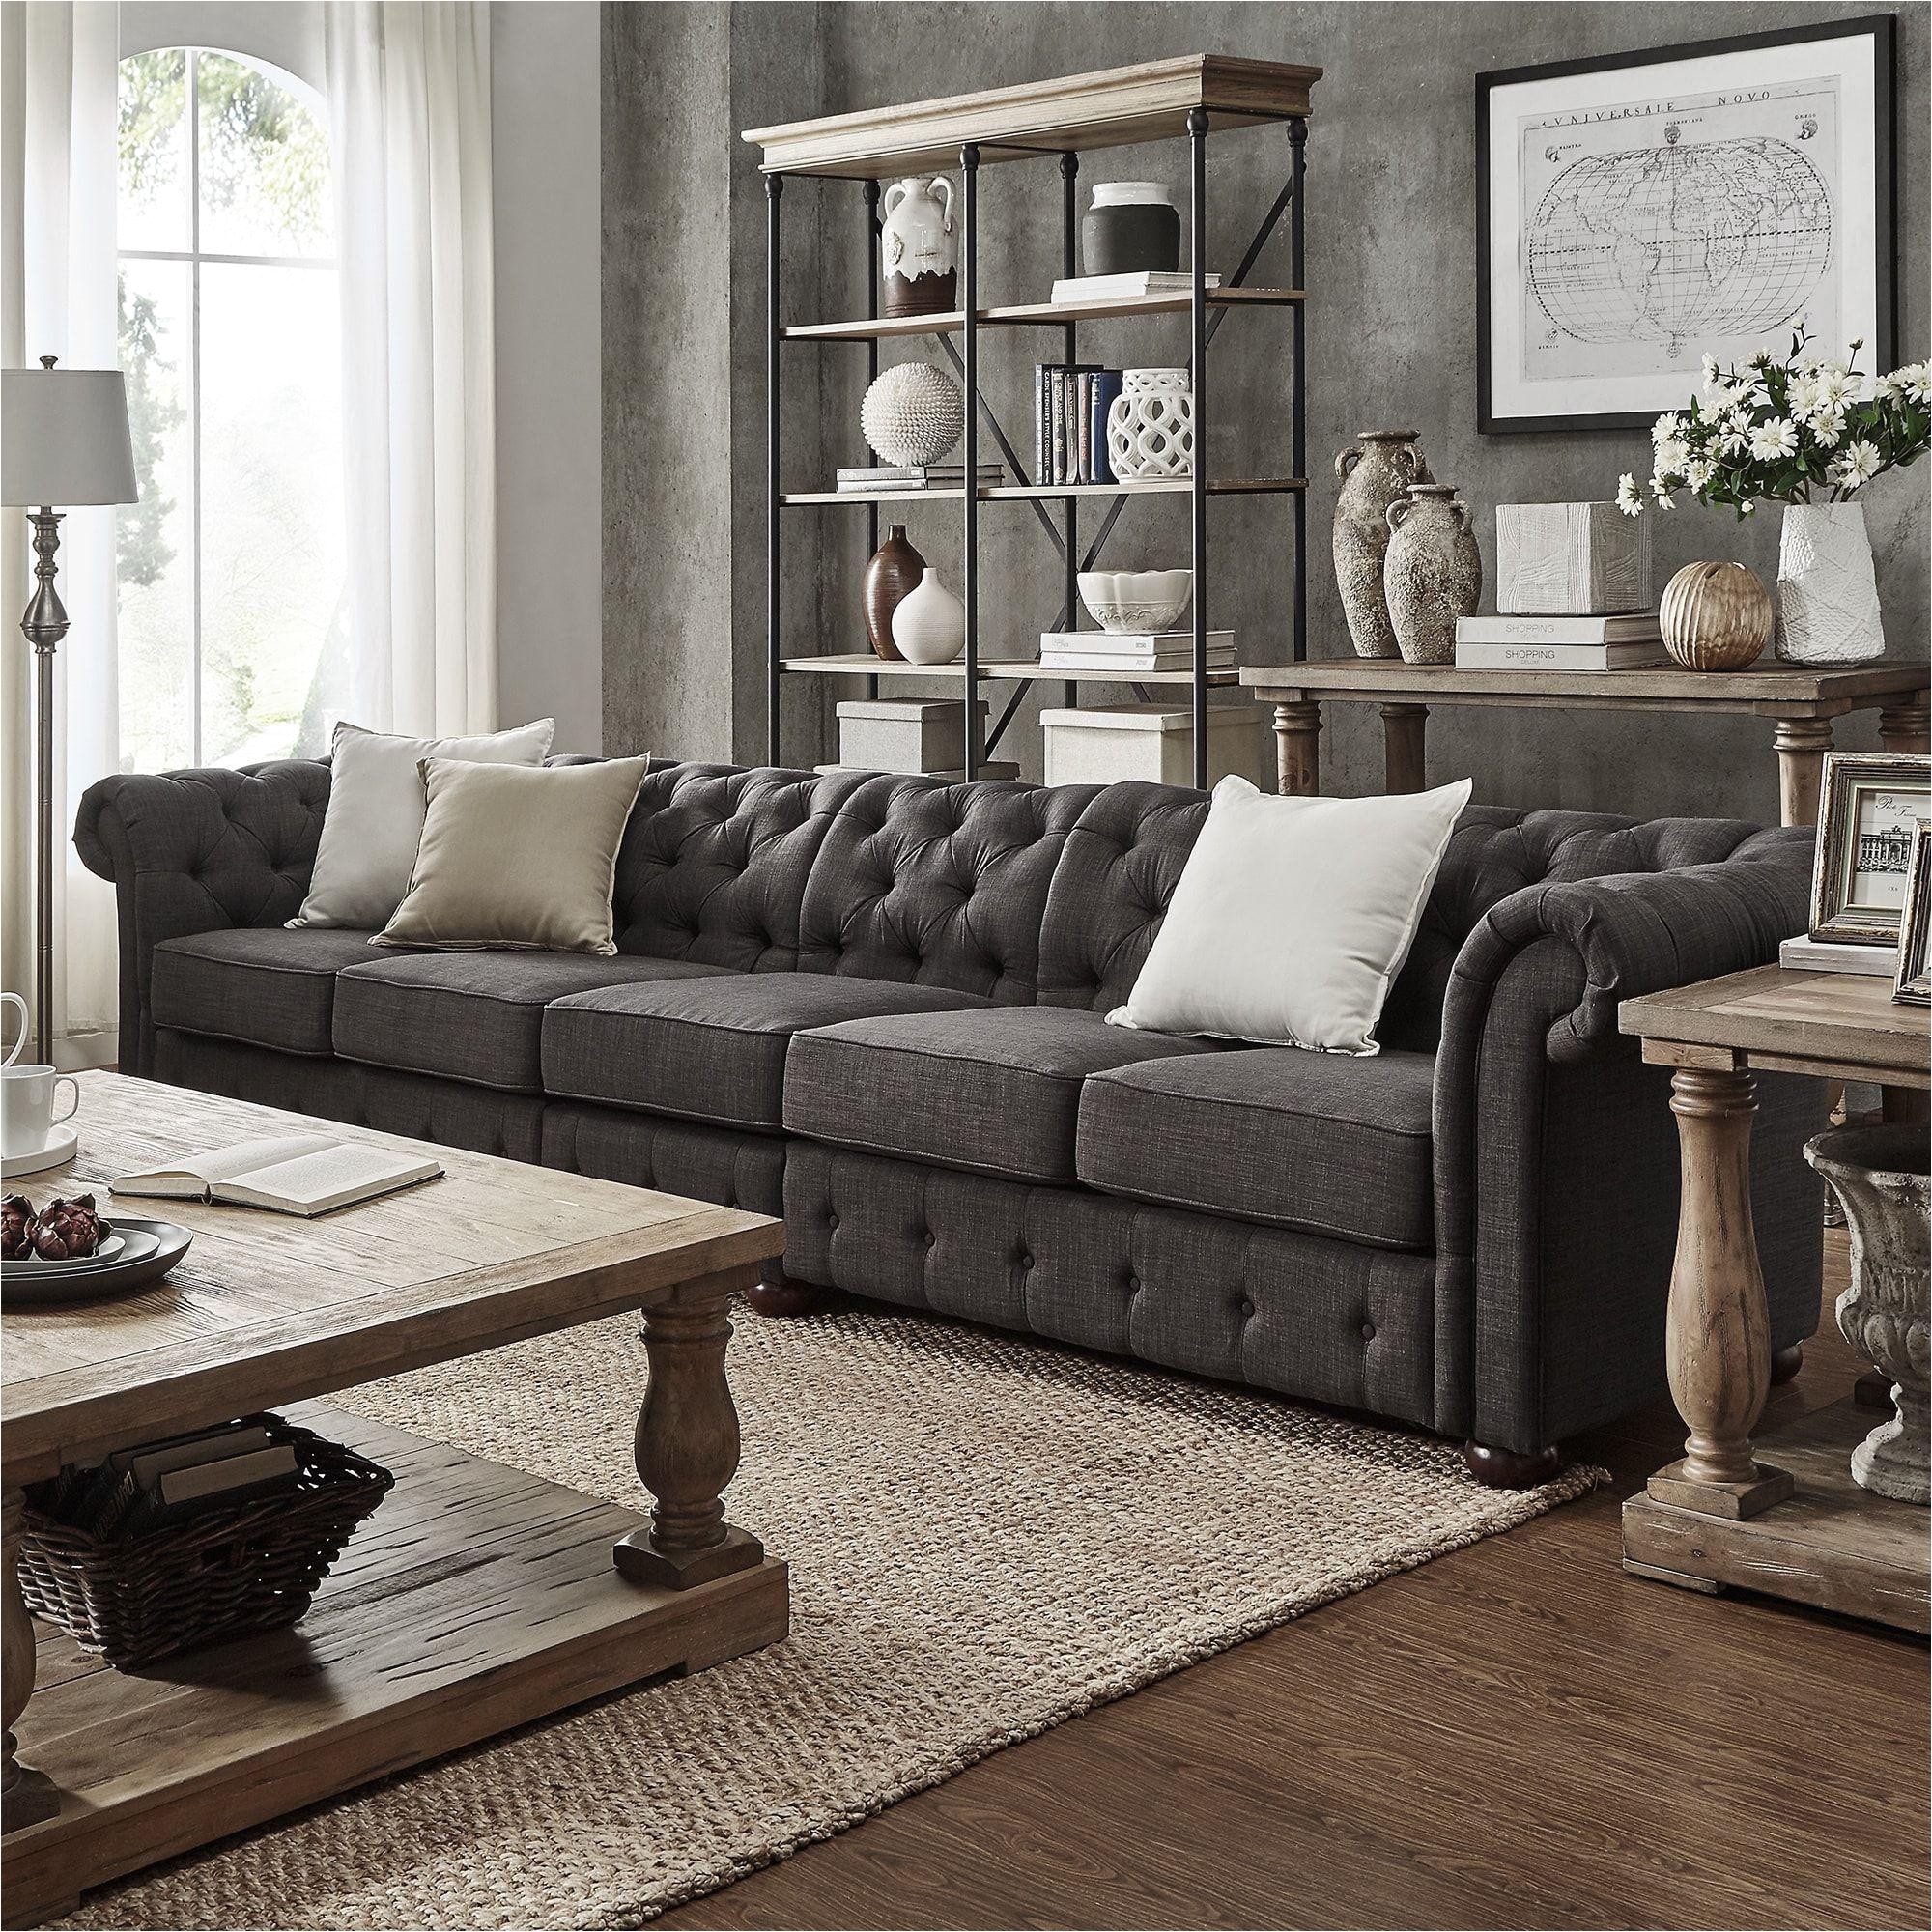 Living Room Furniture Design Ideas Modern Leather Living Room Furniture Ideas Incredible Black sofas